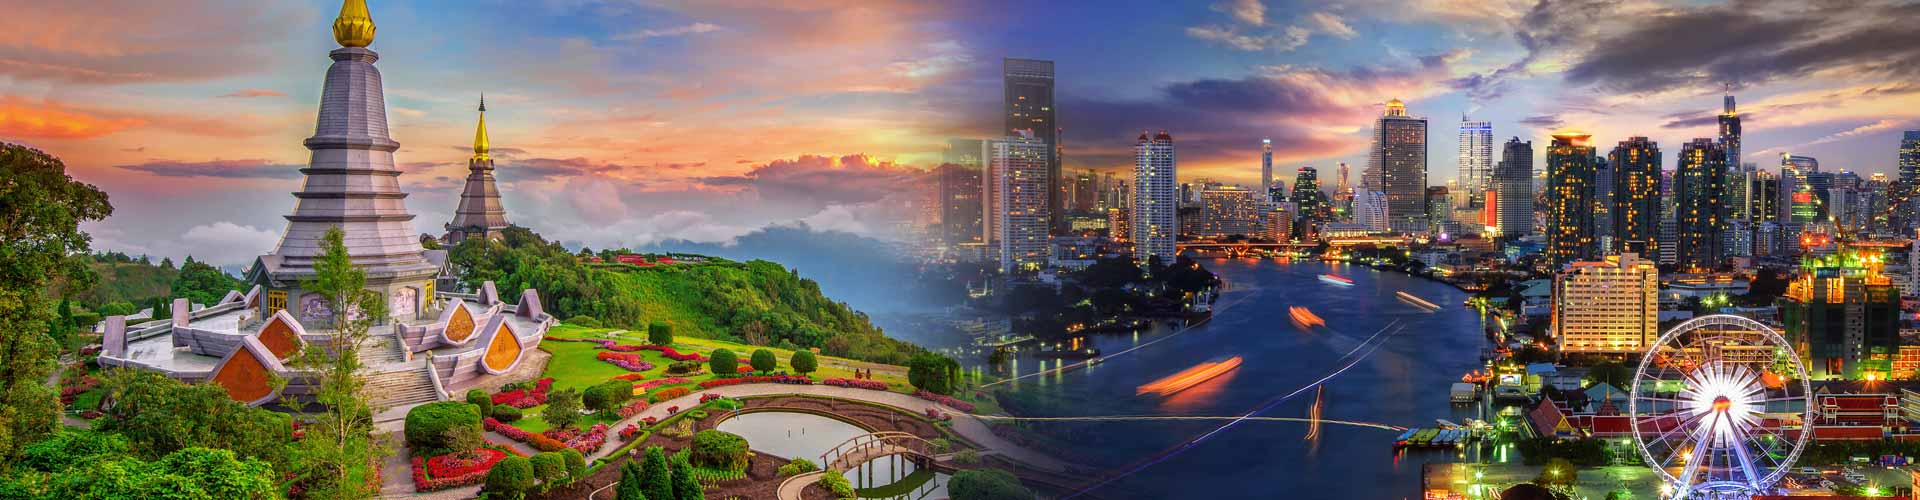 Thailand Multicentre Holidays 2020/2021